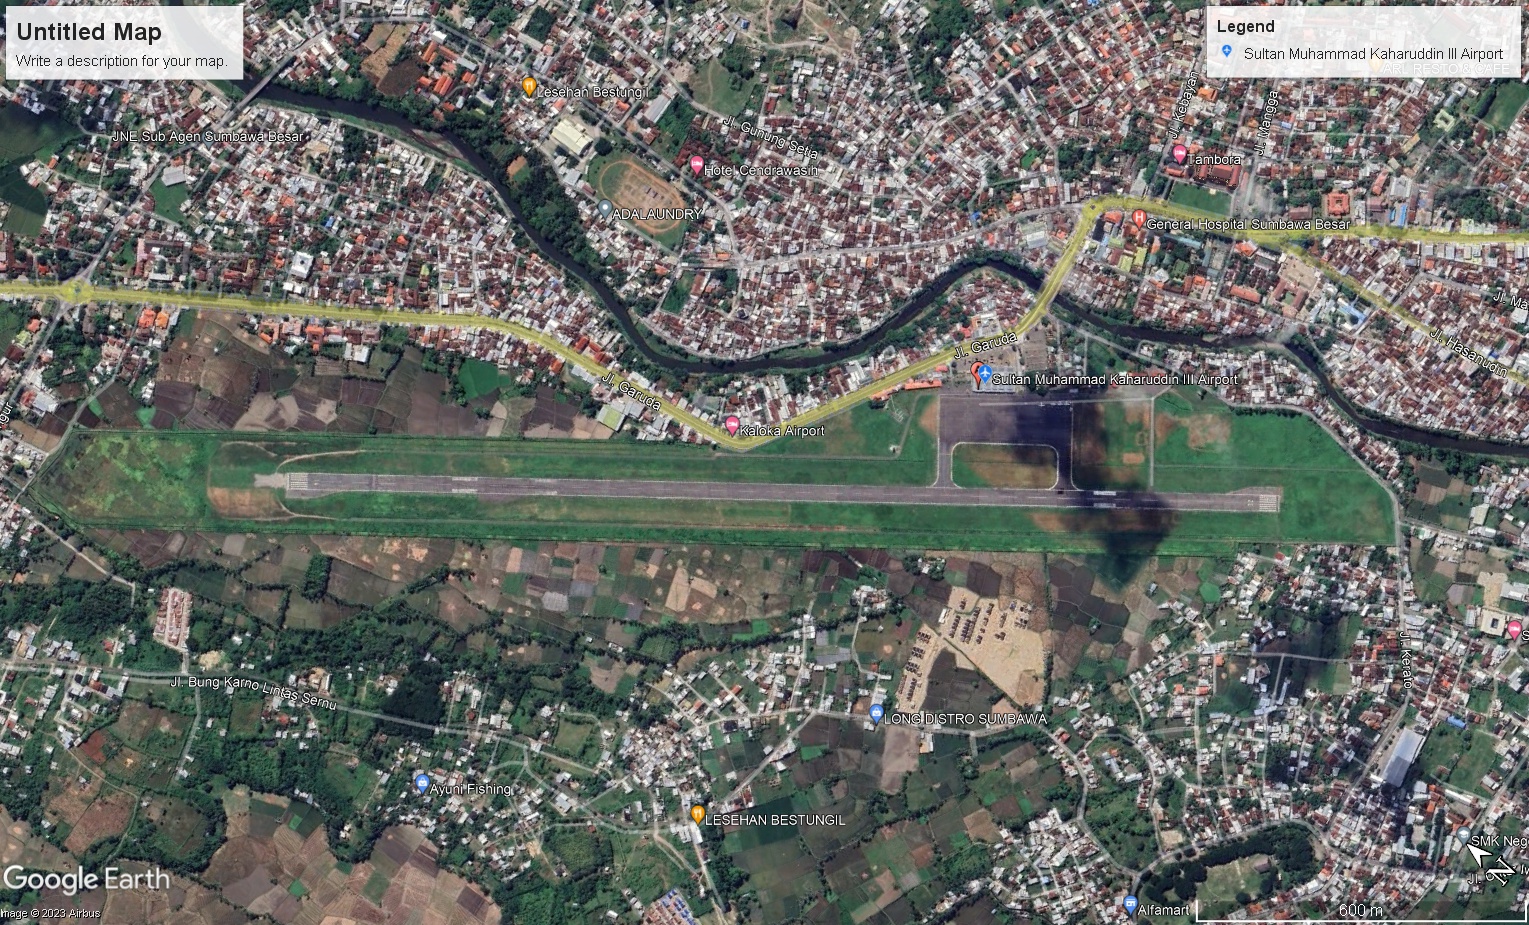 Gambar Peta Bandara Bandara Sultan Muhammad Kaharuddin Sumbawa terletak di Kabupaten Sumbawa Nusa Tenggara Barat